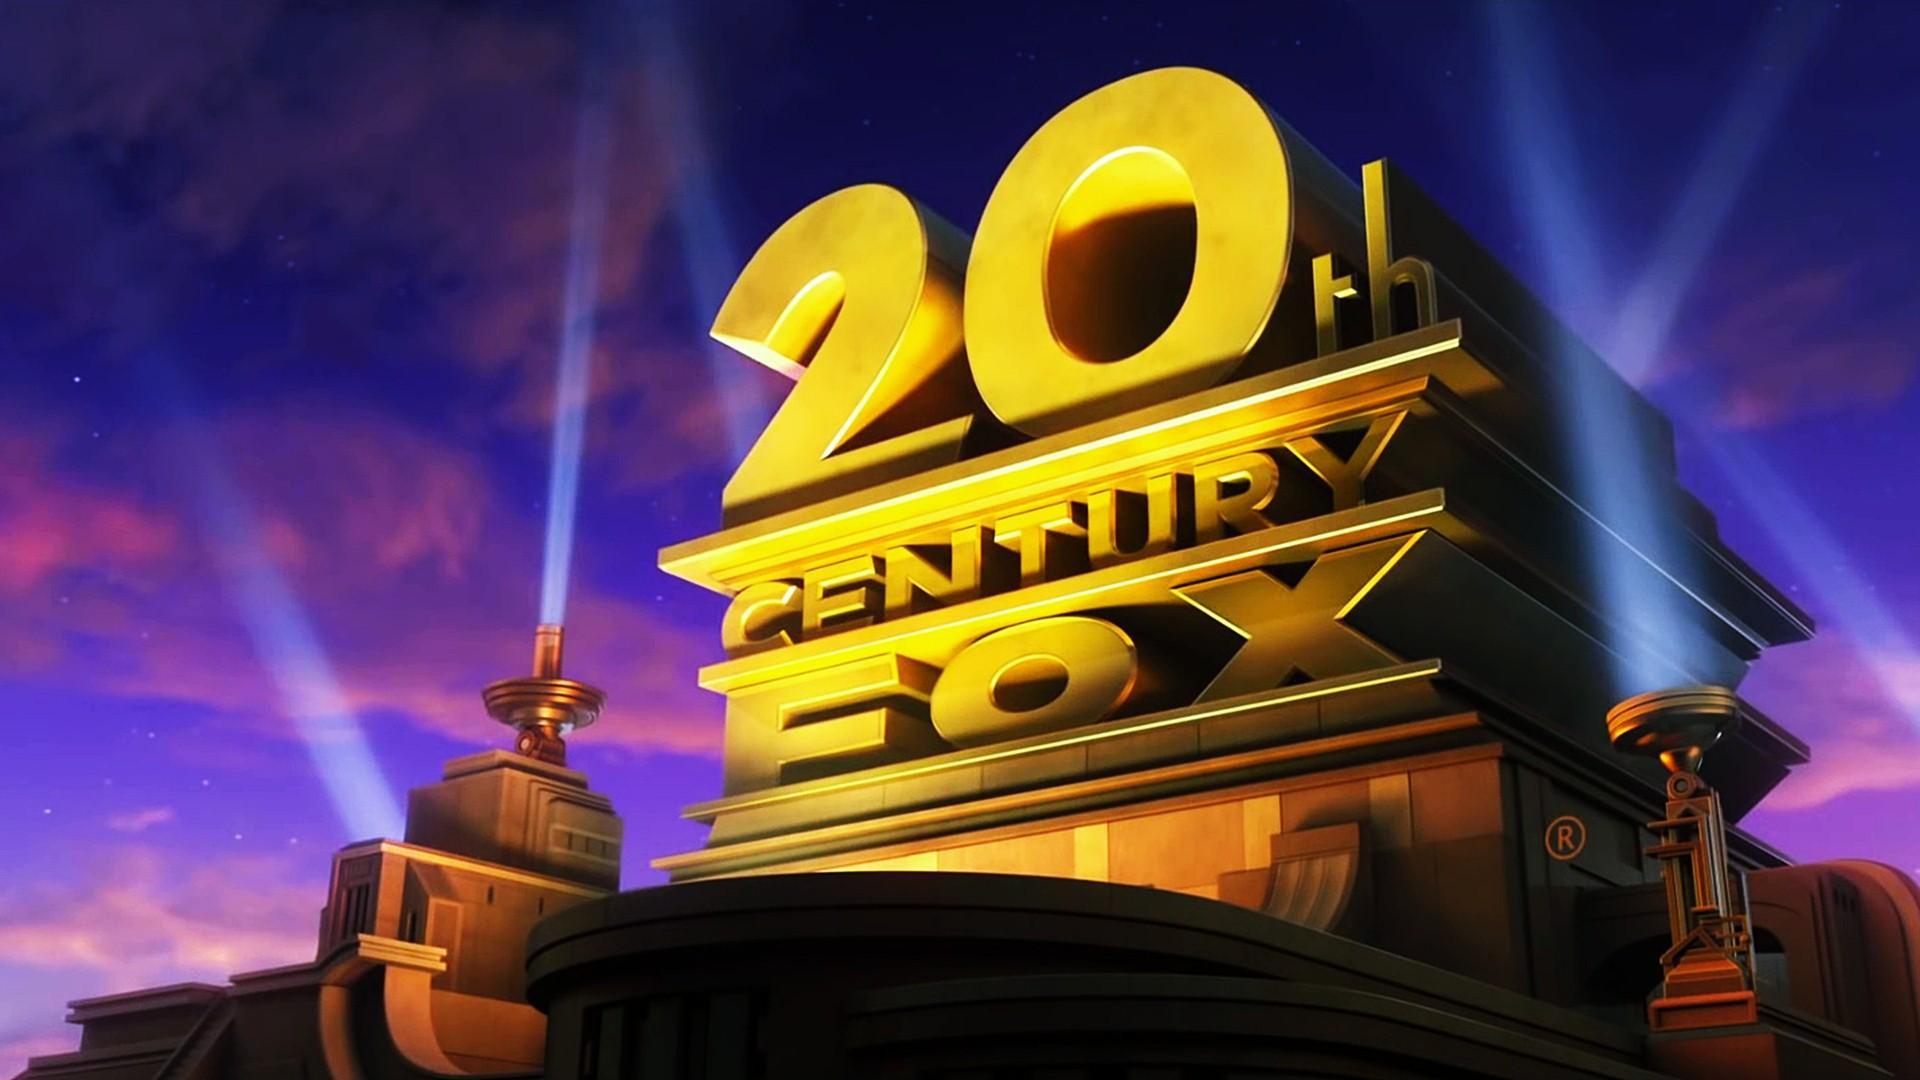 20th Century Fox Wallpaper HD Background, Image, Pics, Photo